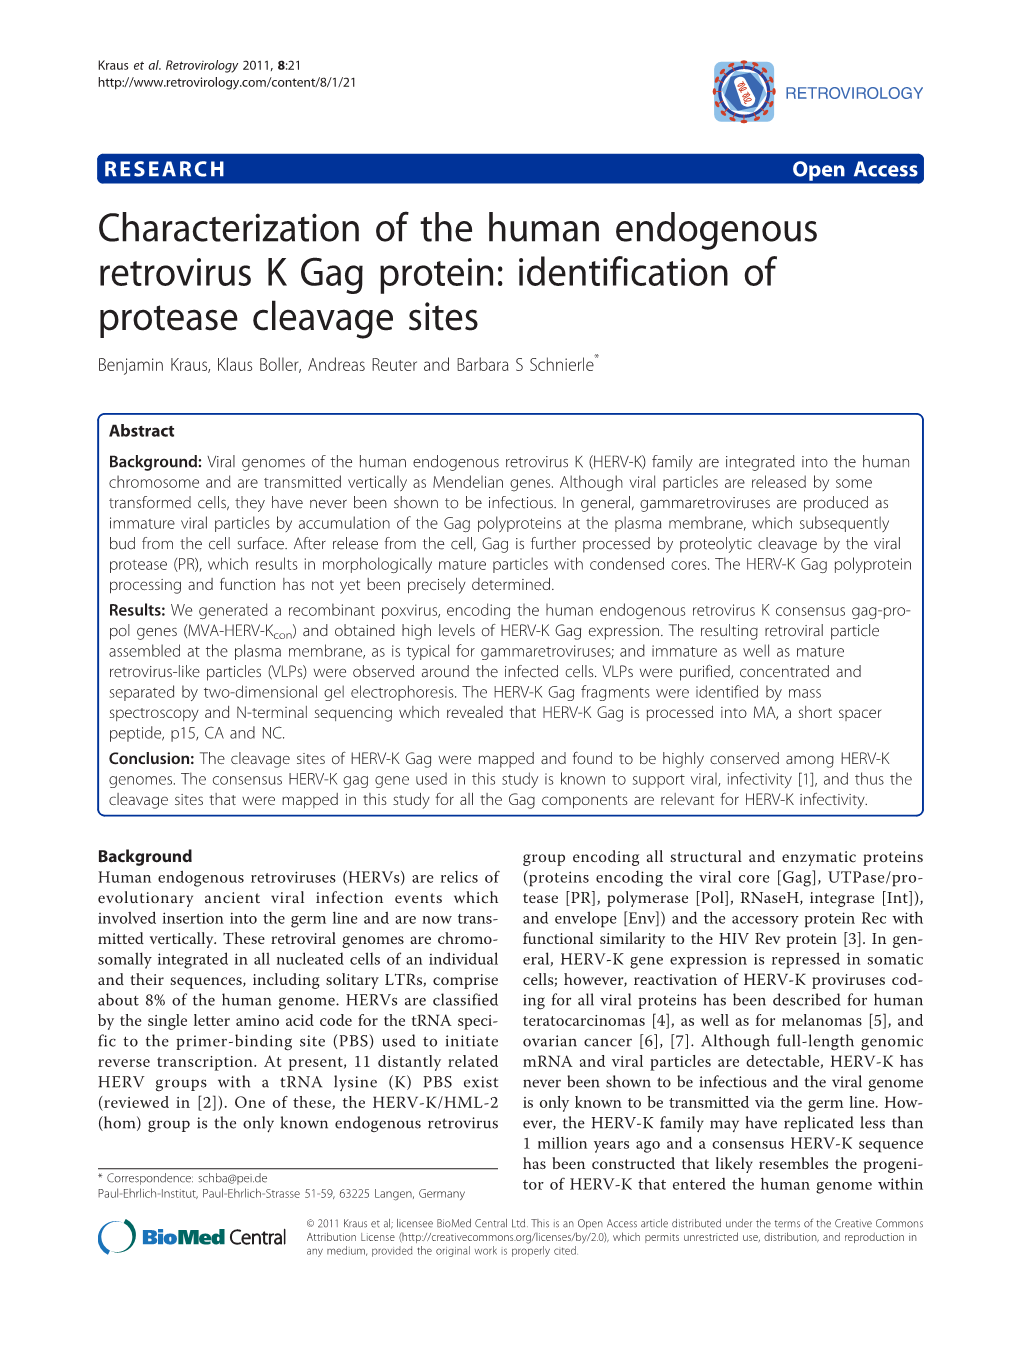 Characterization of the Human Endogenous Retrovirus K Gag